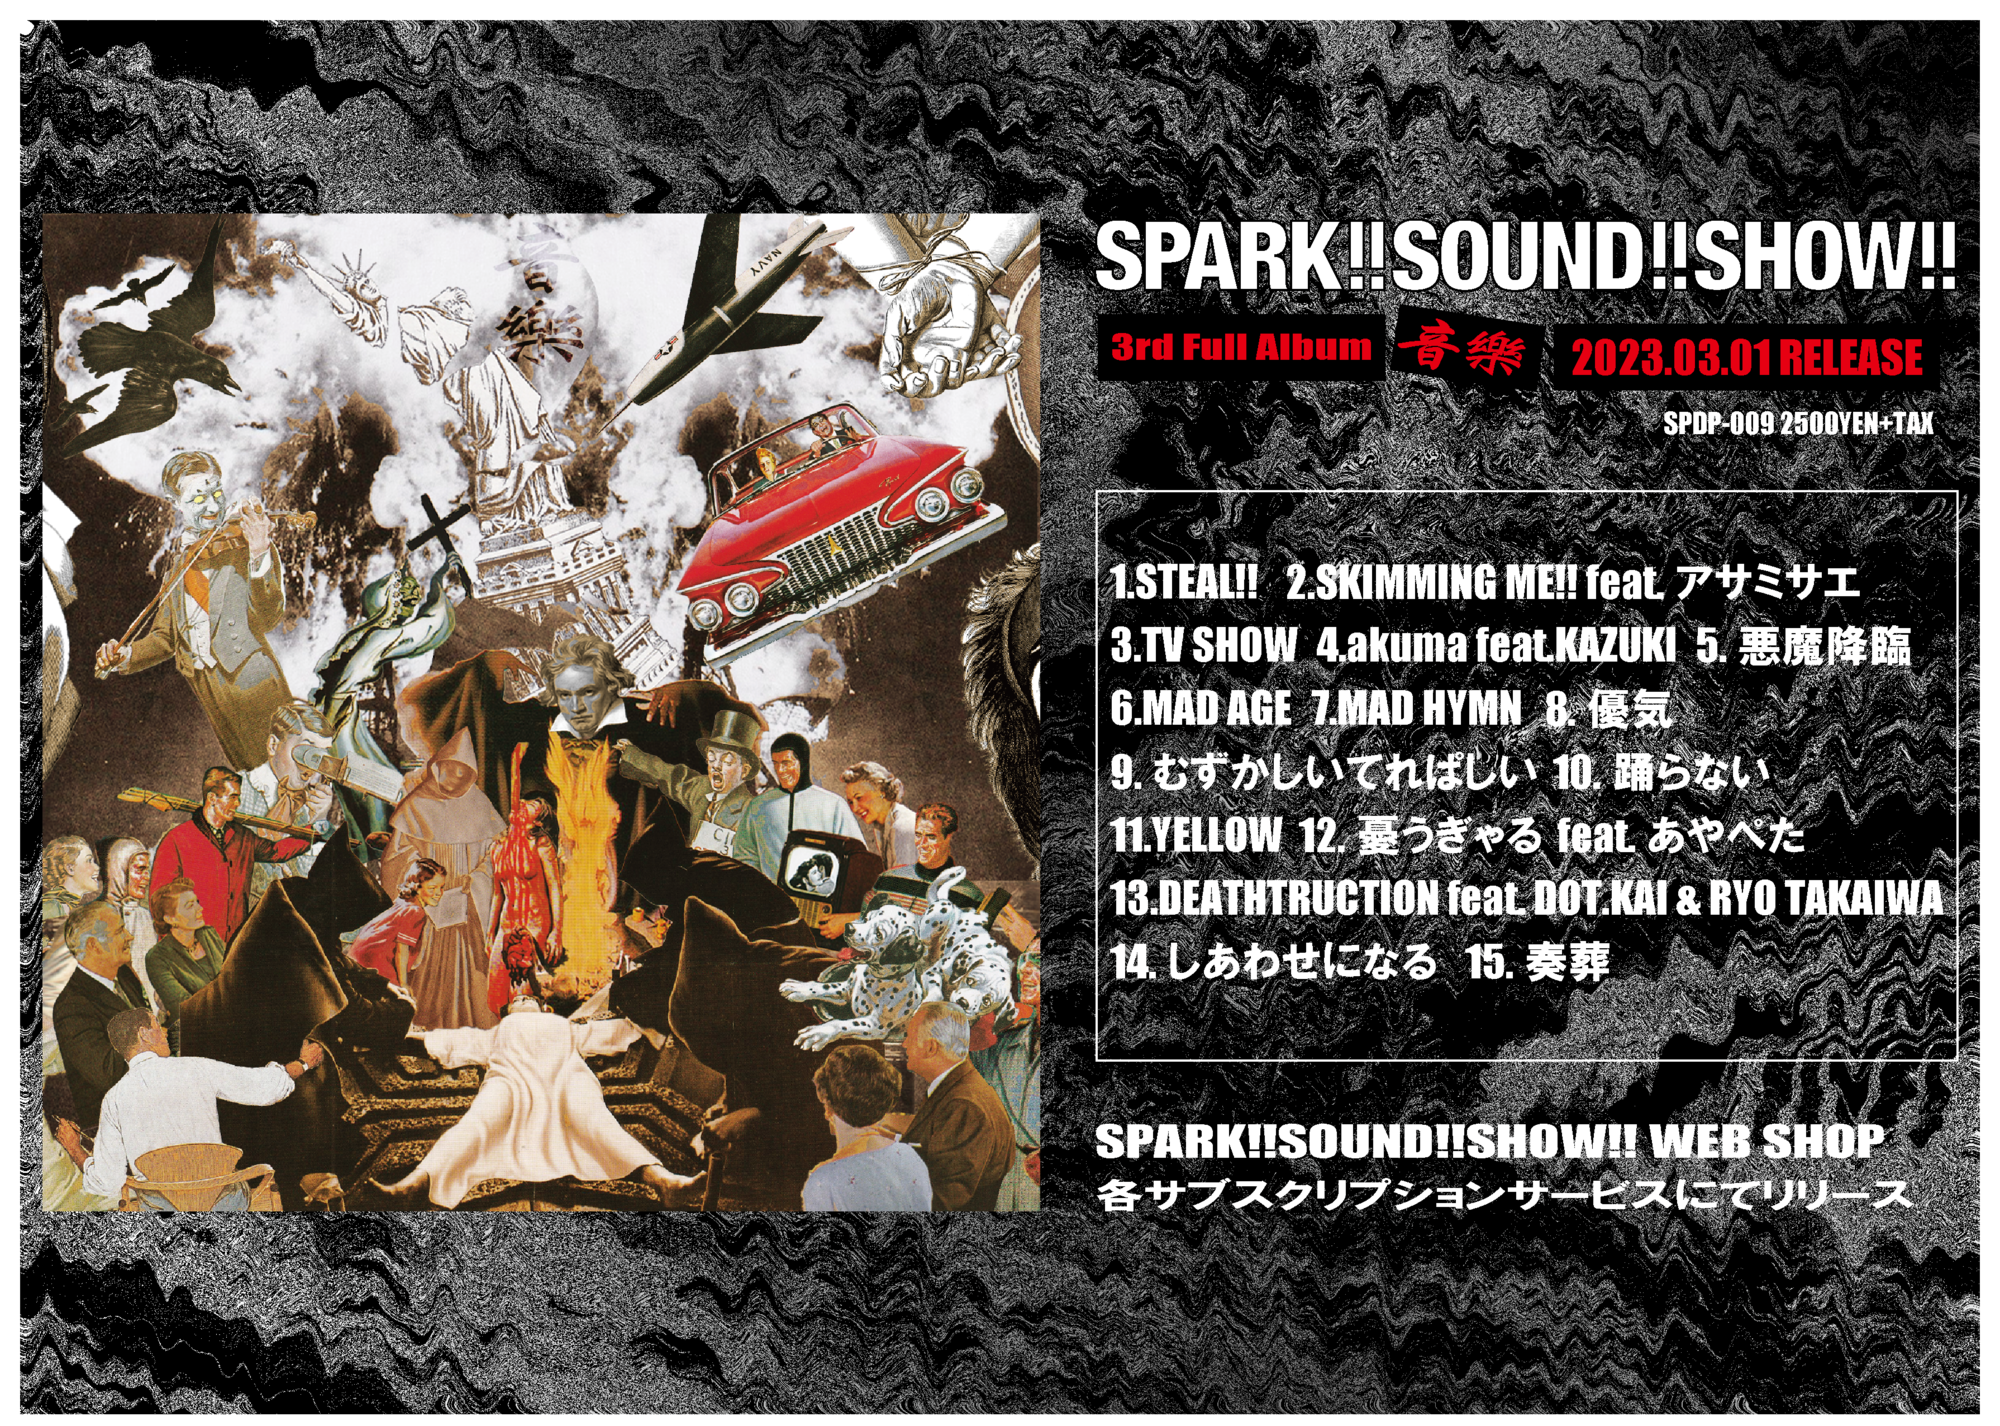 3nd Full Album ”音樂” 発売決定!! | SPARK!!SOUND!!SHOW!! OFFICIAL SITE